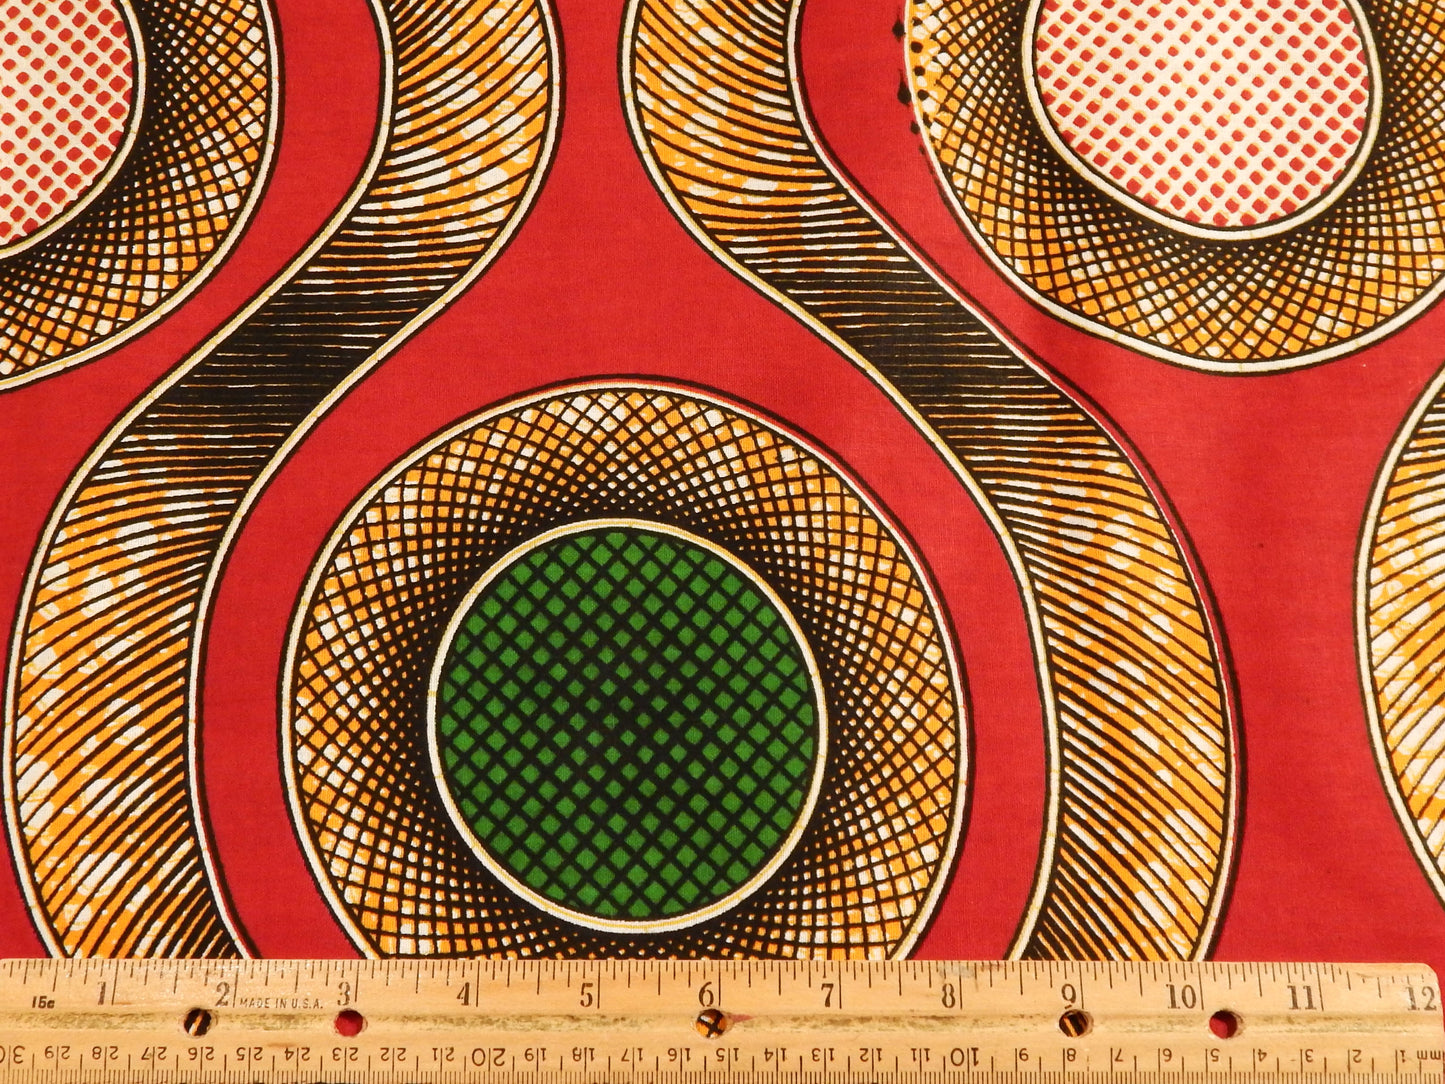 Weaving Worlds - African Print Cotton